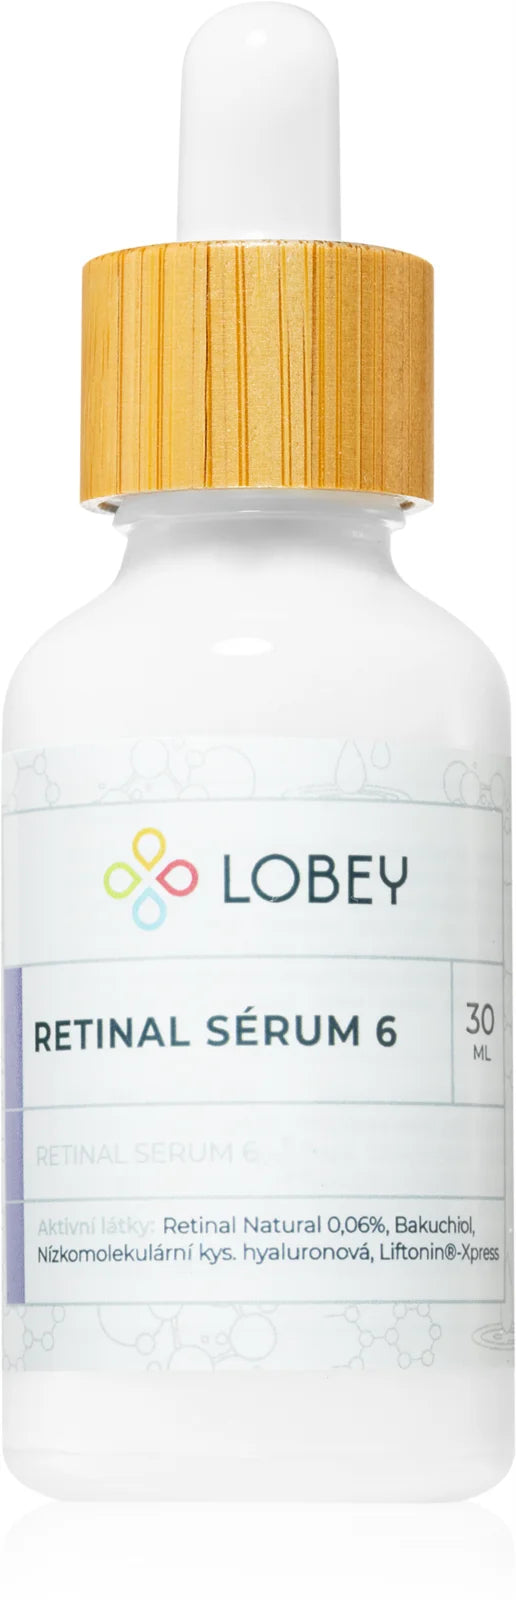 Lobey Retinal Face Serum 6 - 30 ml